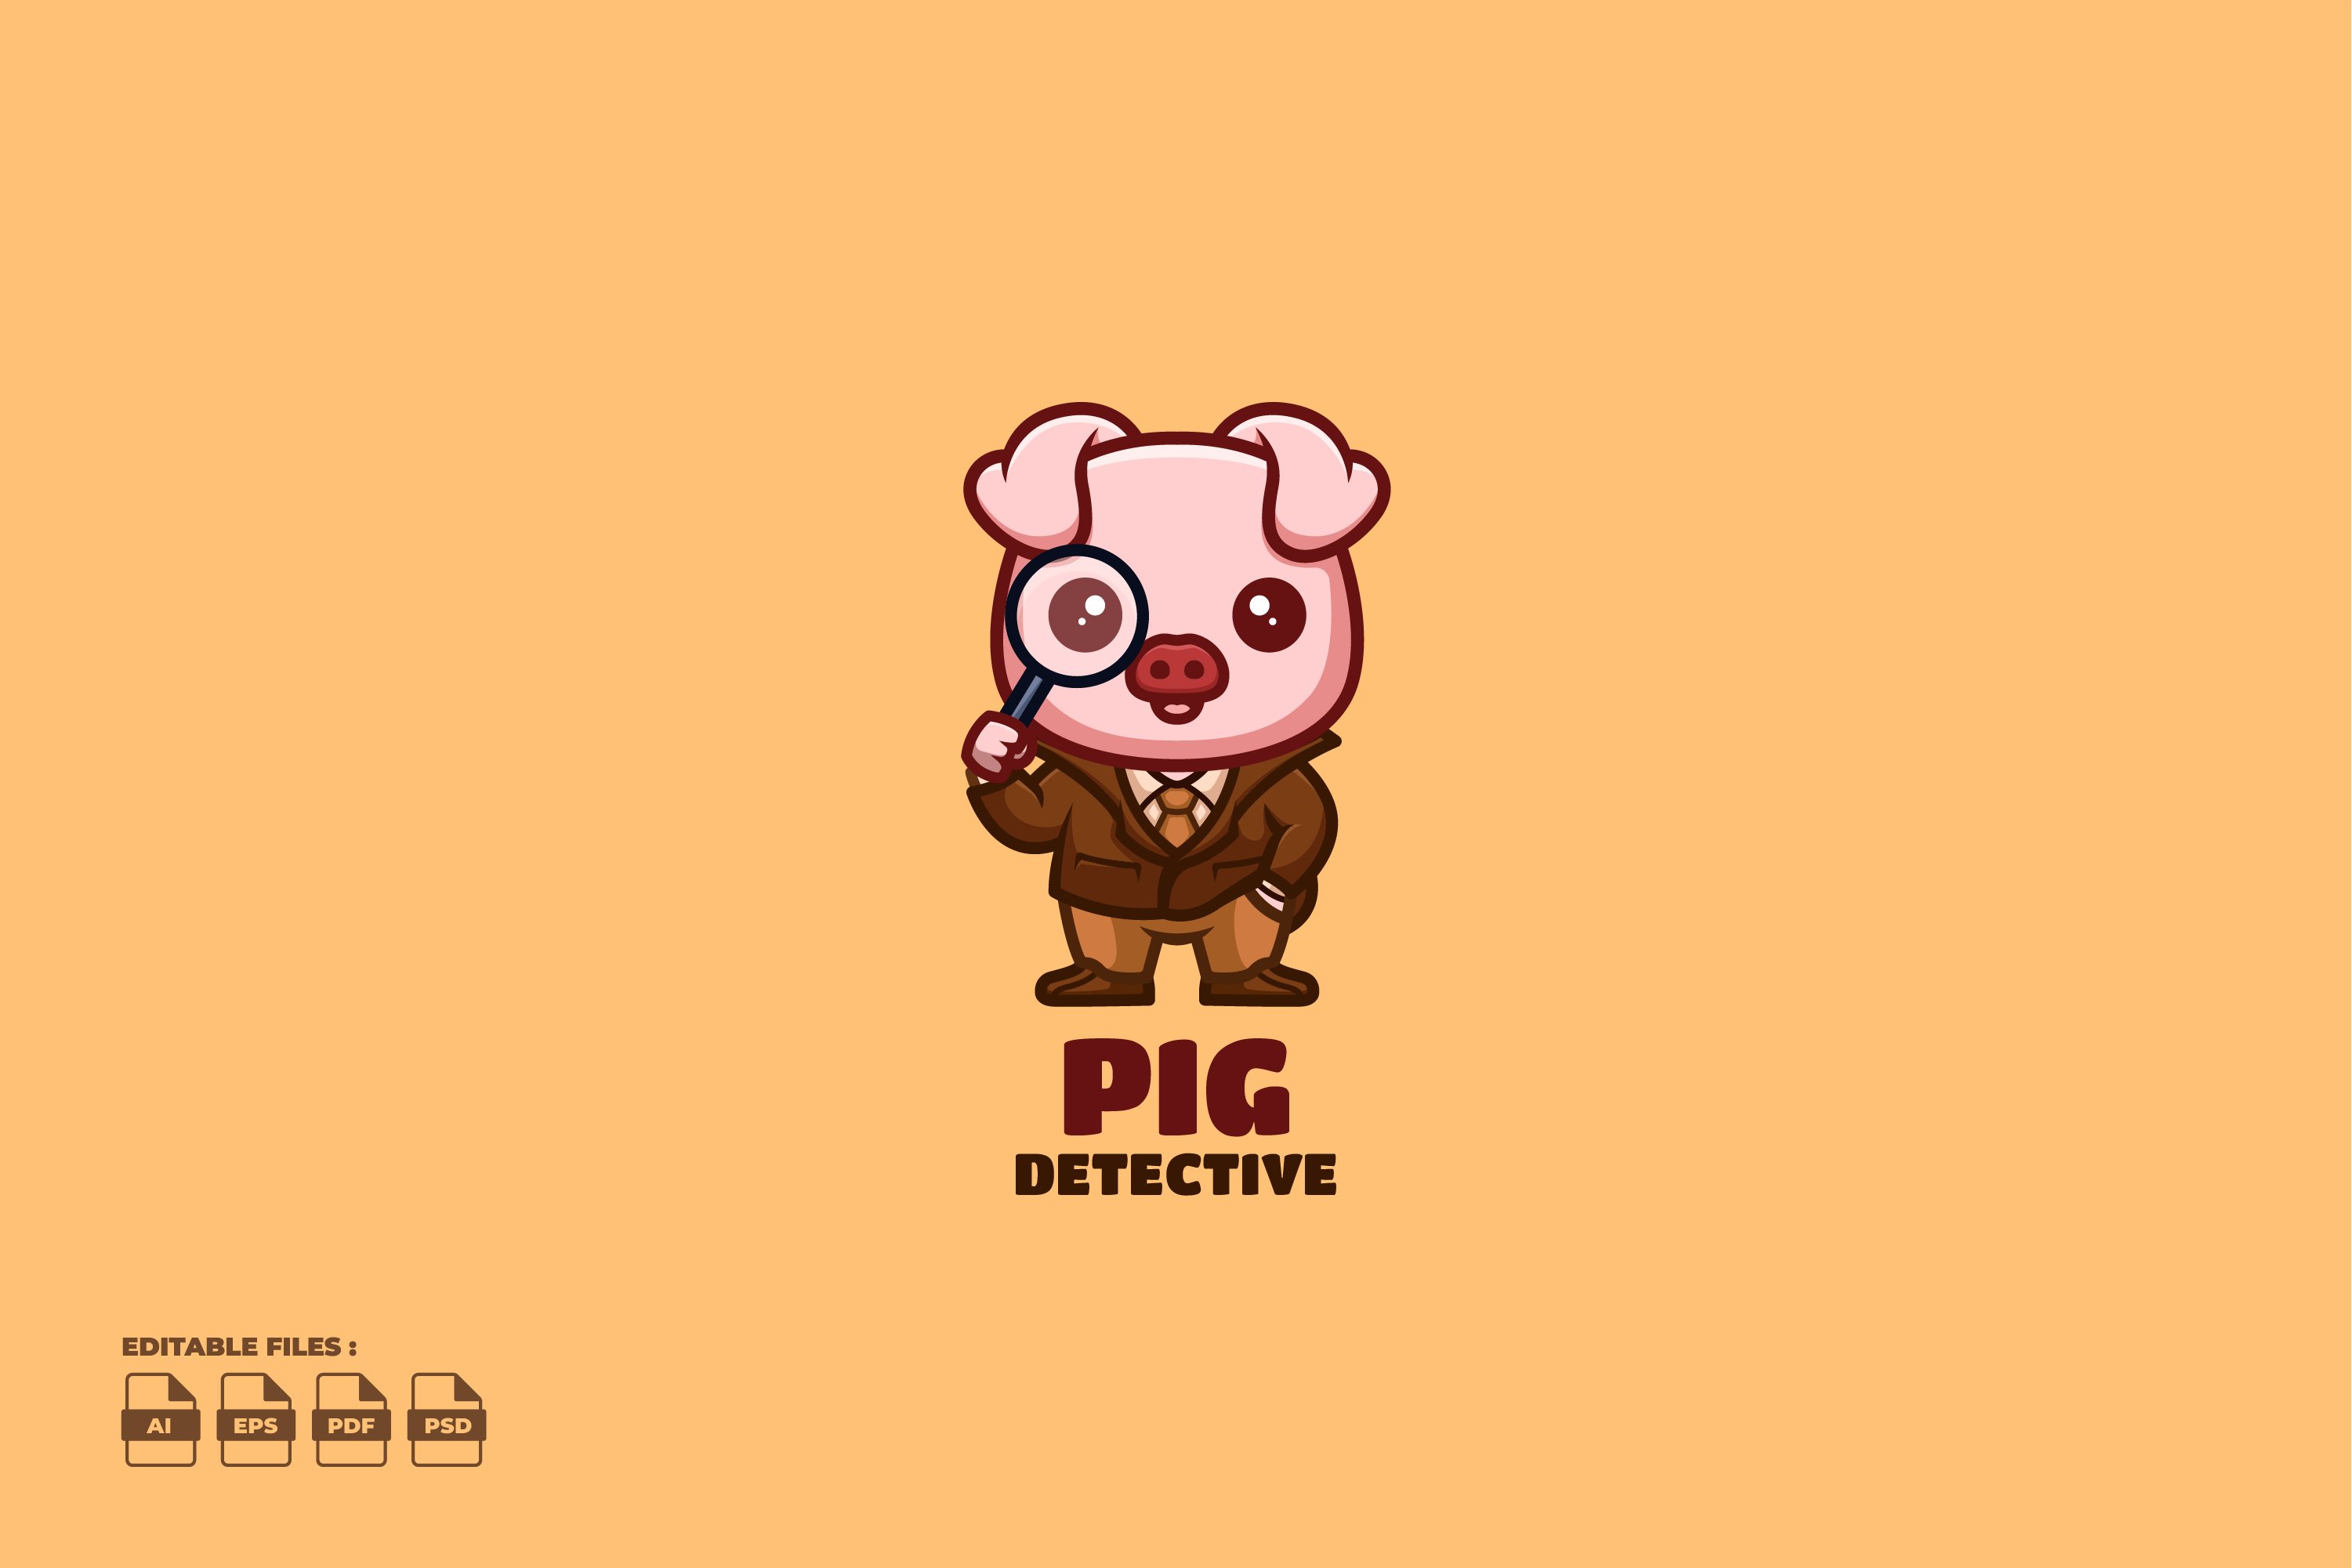 Detective Pig Cute Mascot Logo cover image.